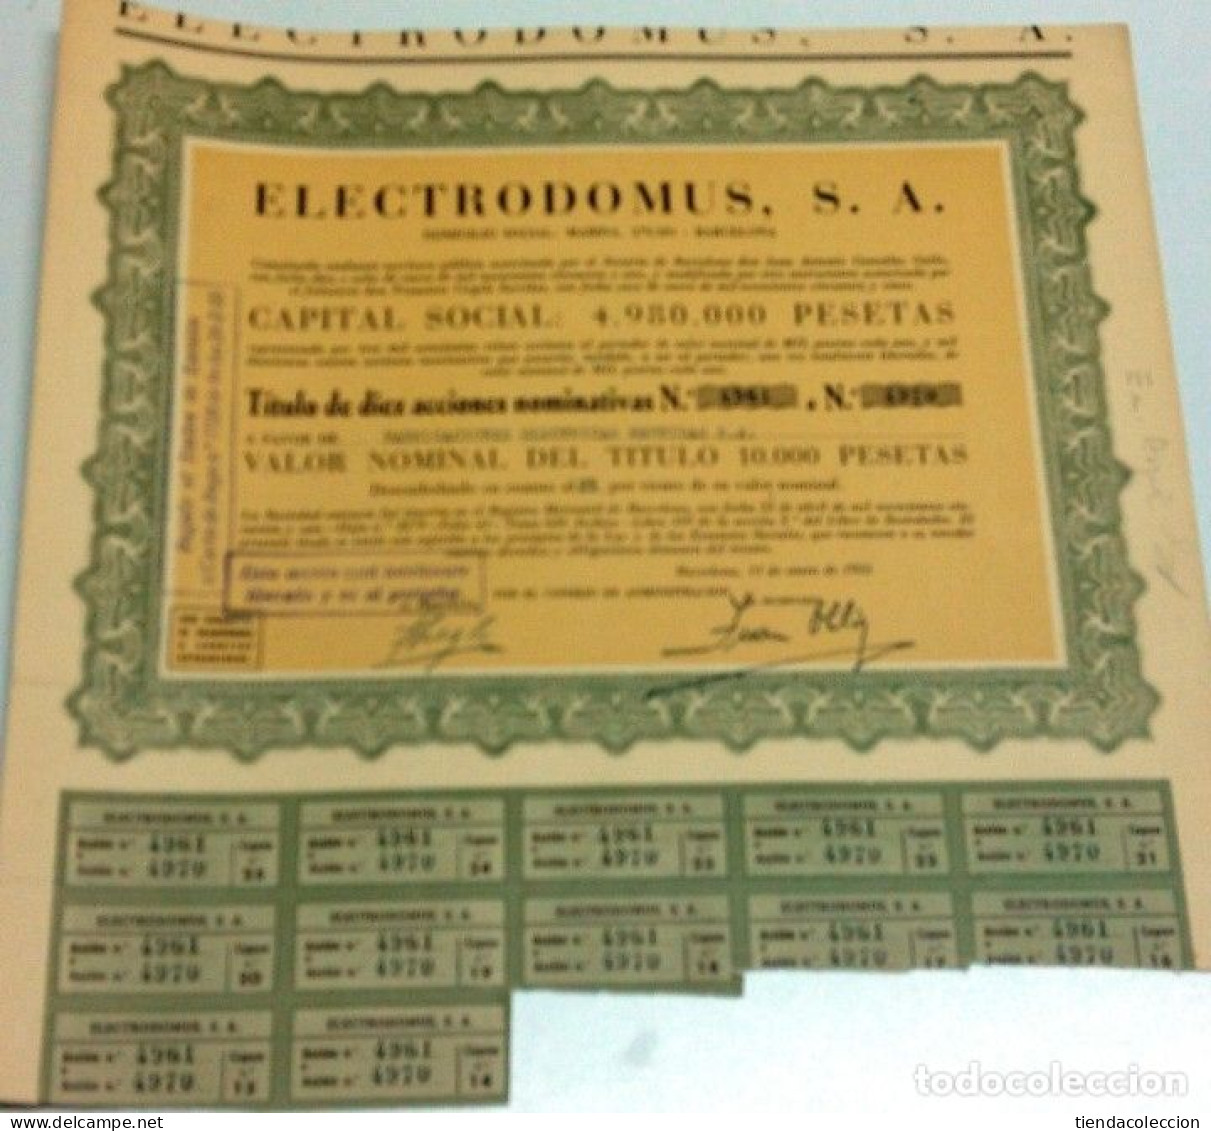 Electrodomus, S. A. - Elettricità & Gas